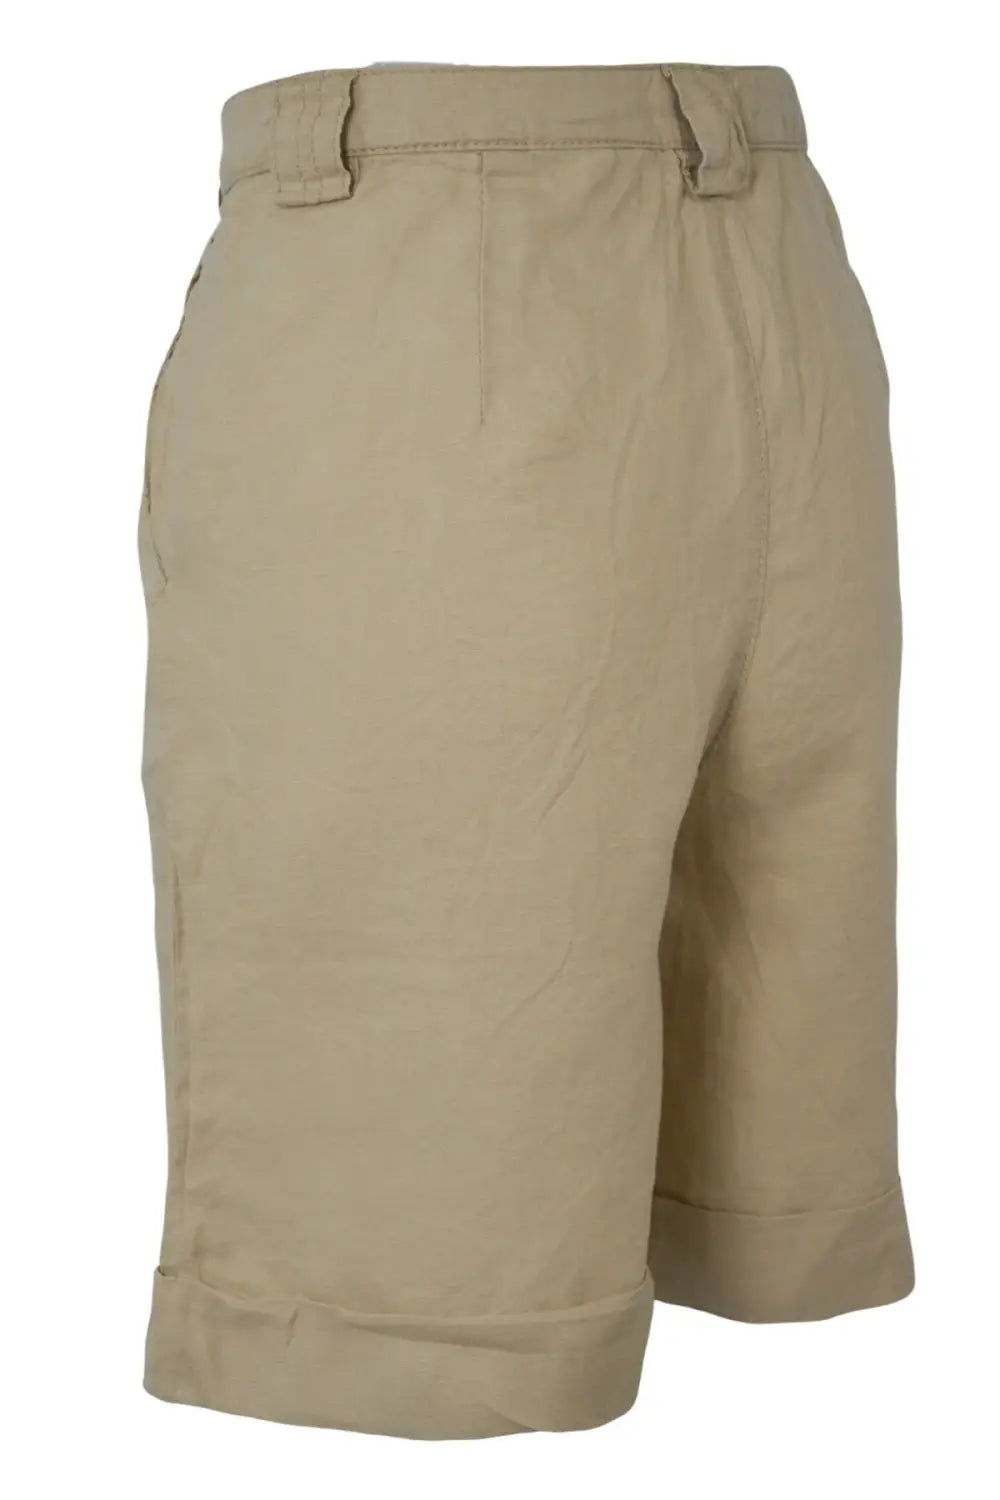 Benetton Long Cotton Bermuda Shorts